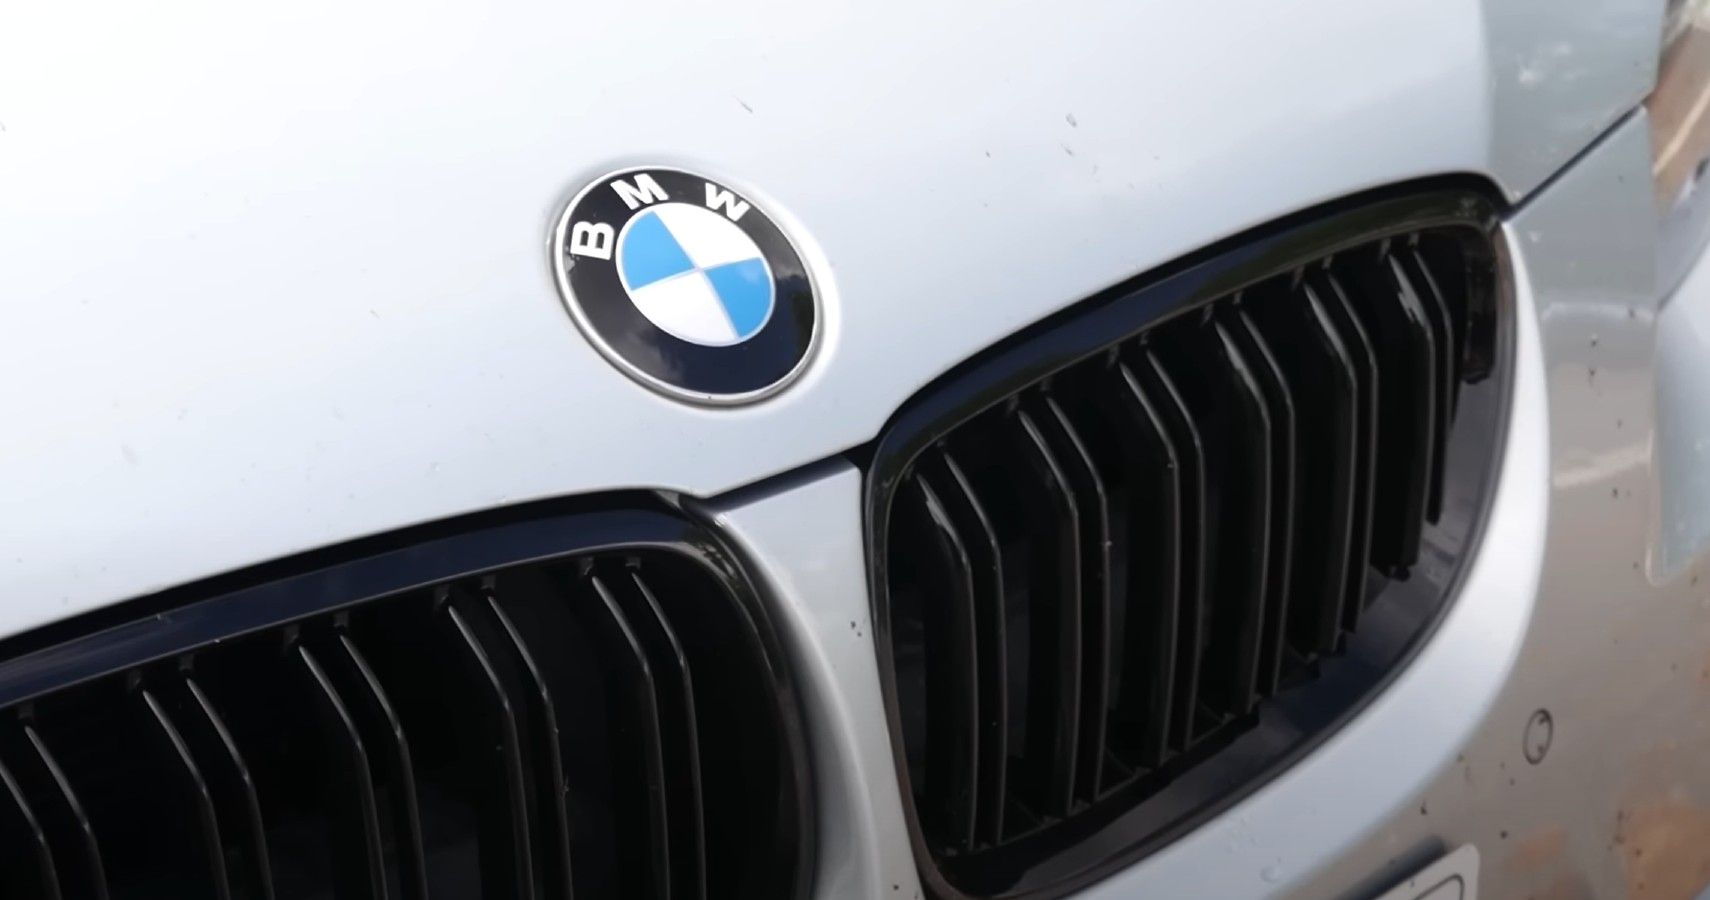 BMW E92 M3 broke